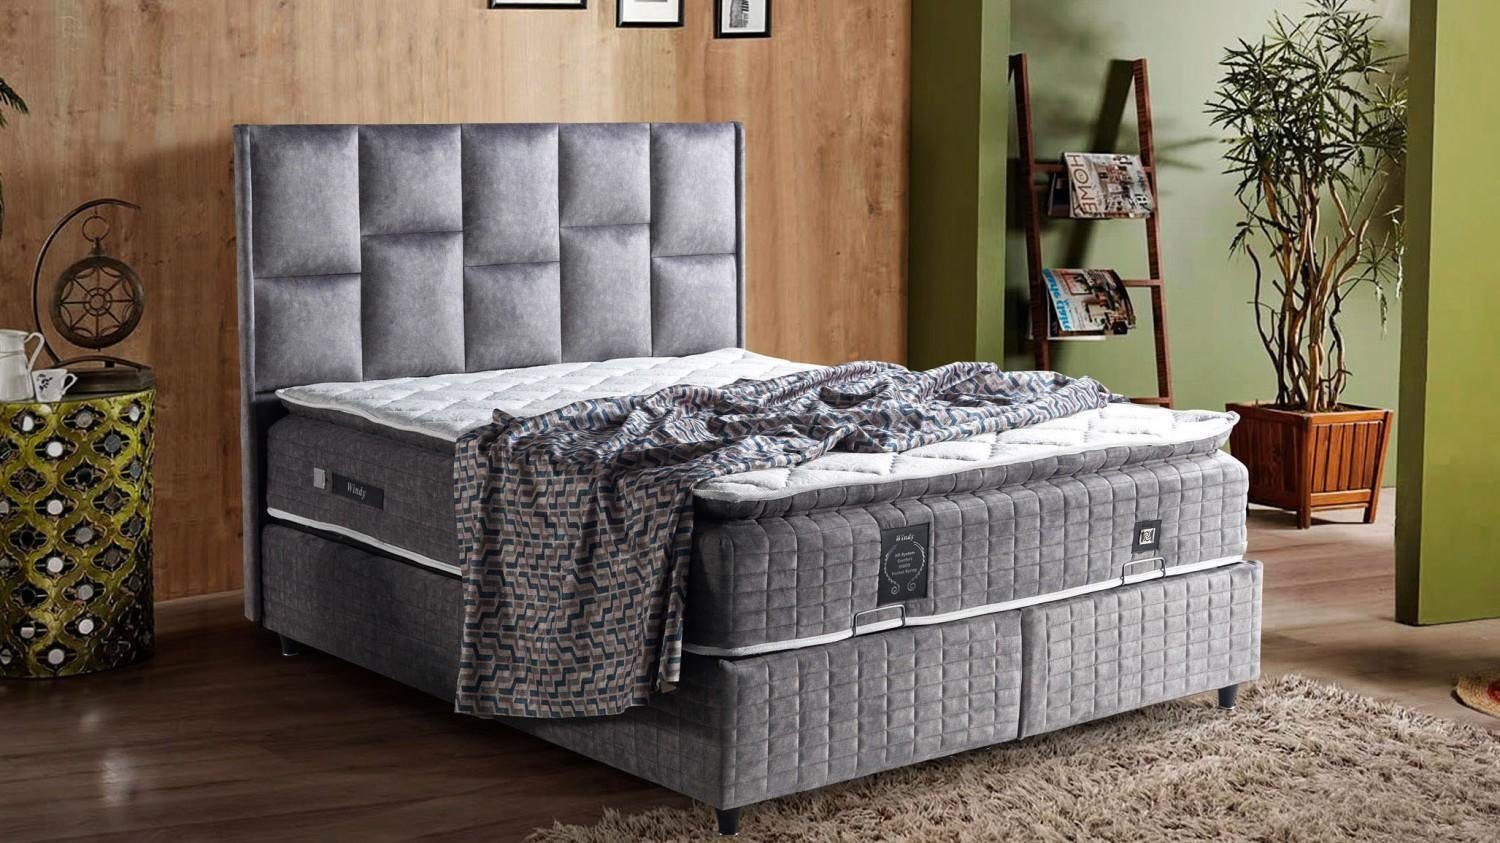 JVmoebel Bett Bett Design Betten Luxus Beige Polster Schlafzimmer Möbel Silber (Bett), Made In Europe | Bettgestelle